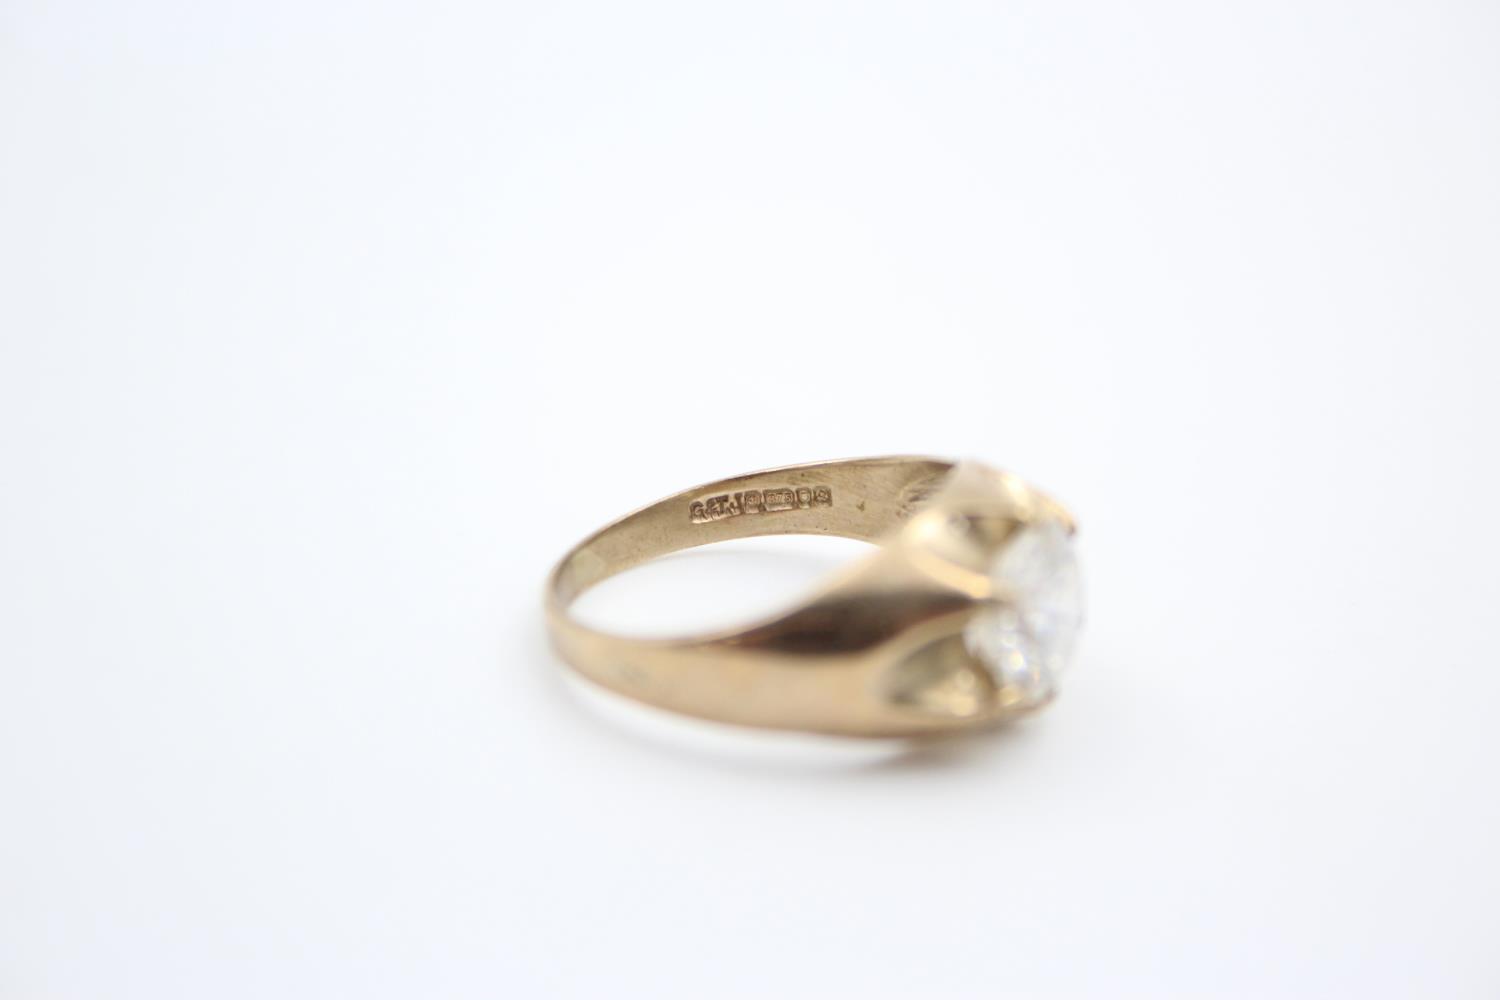 9ct Gold gemstone ring 4.2 grams gross - Image 4 of 5